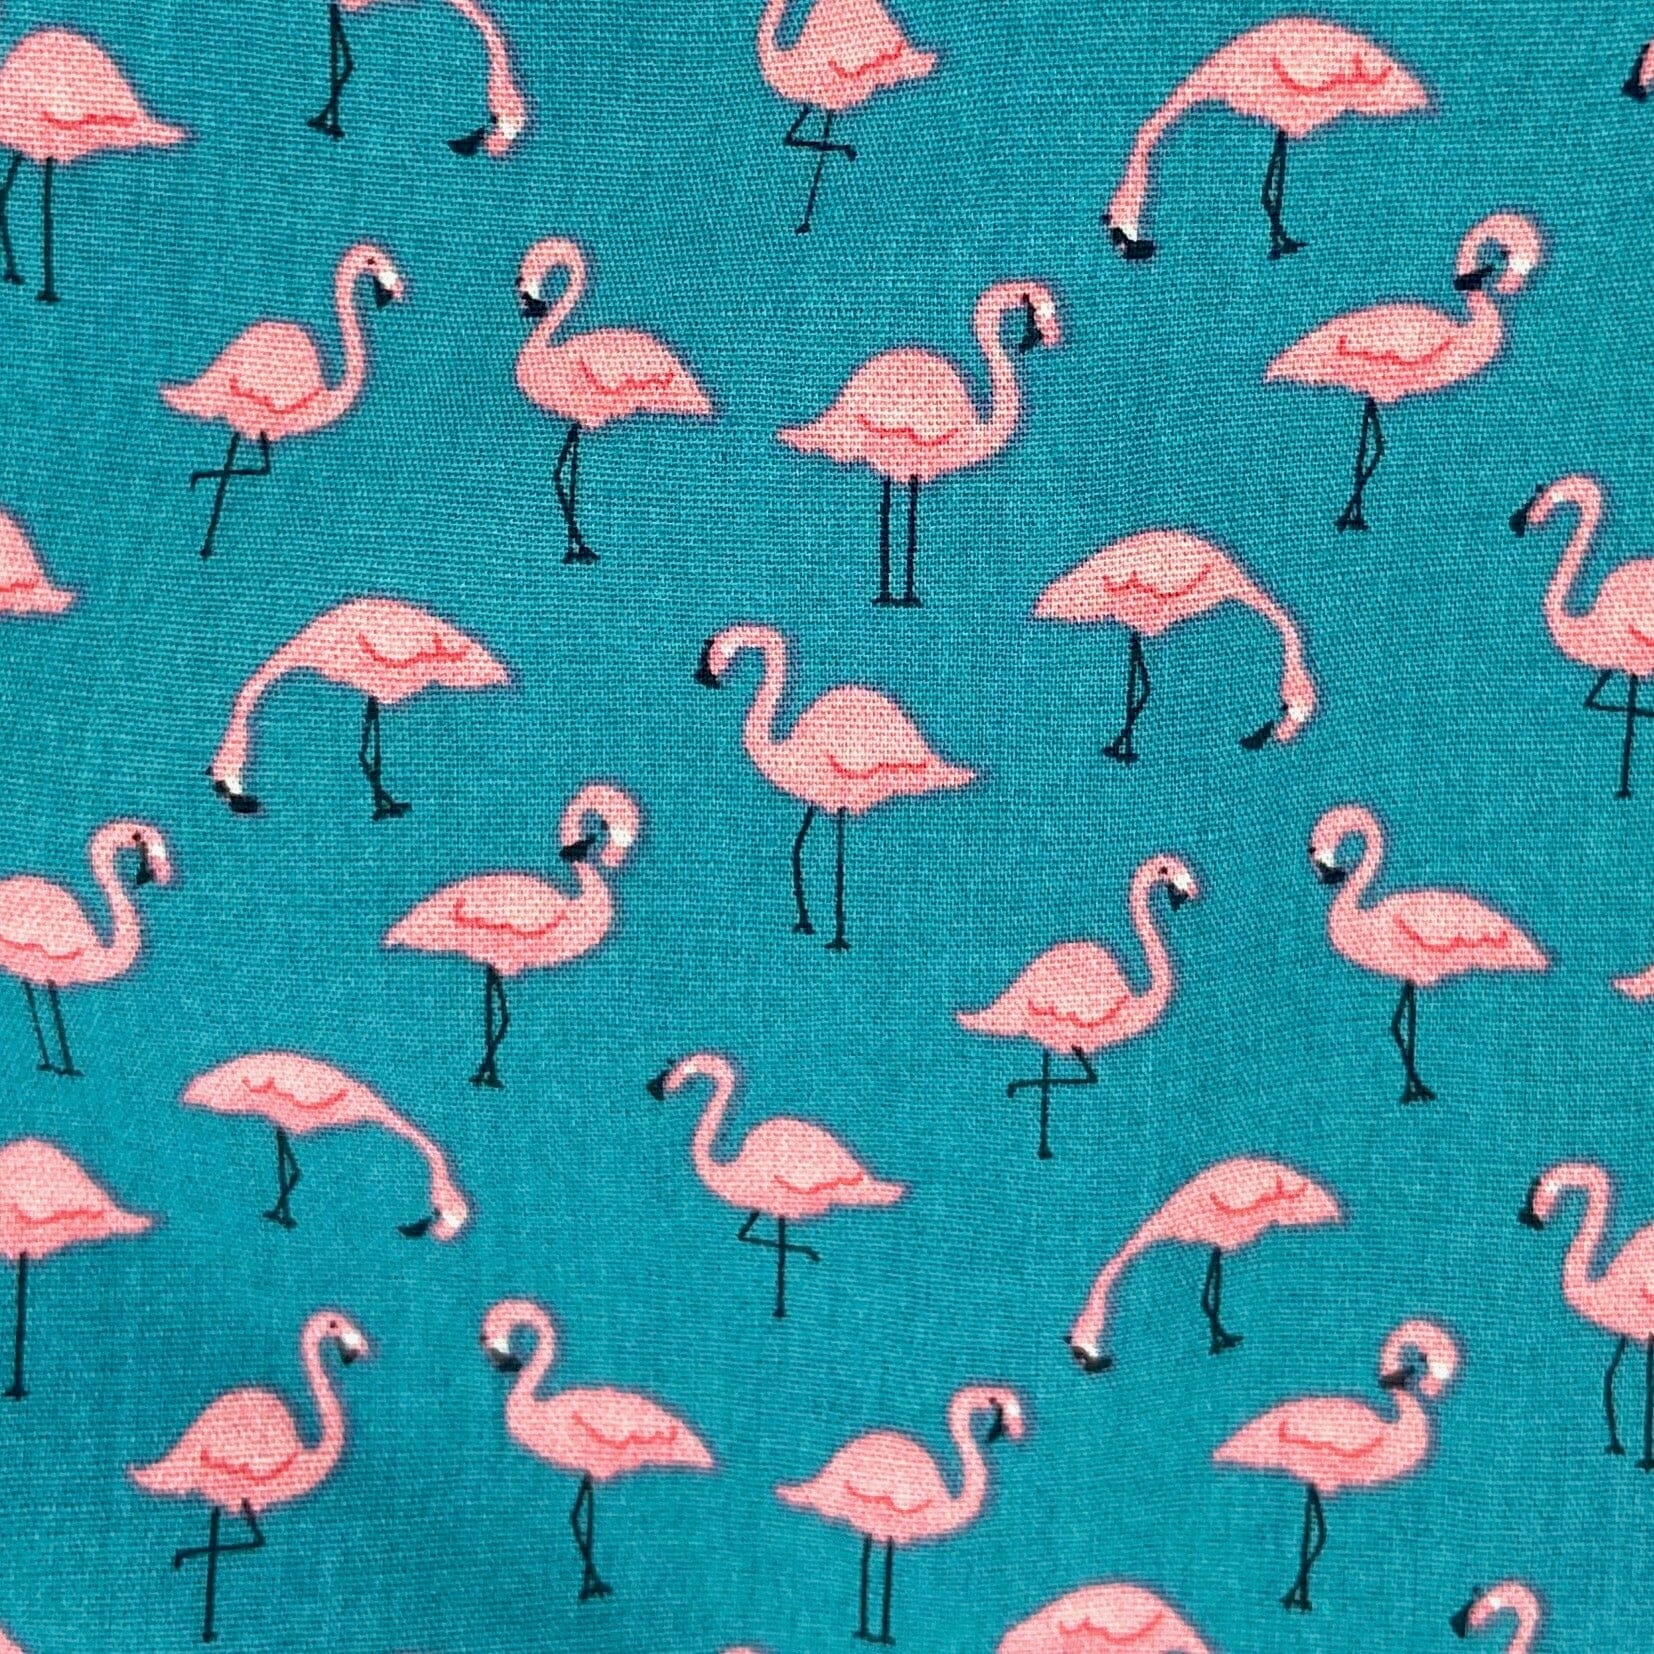 Men's Classic Flamingo Bird All-Over-Print Boxer Shorts Underwear